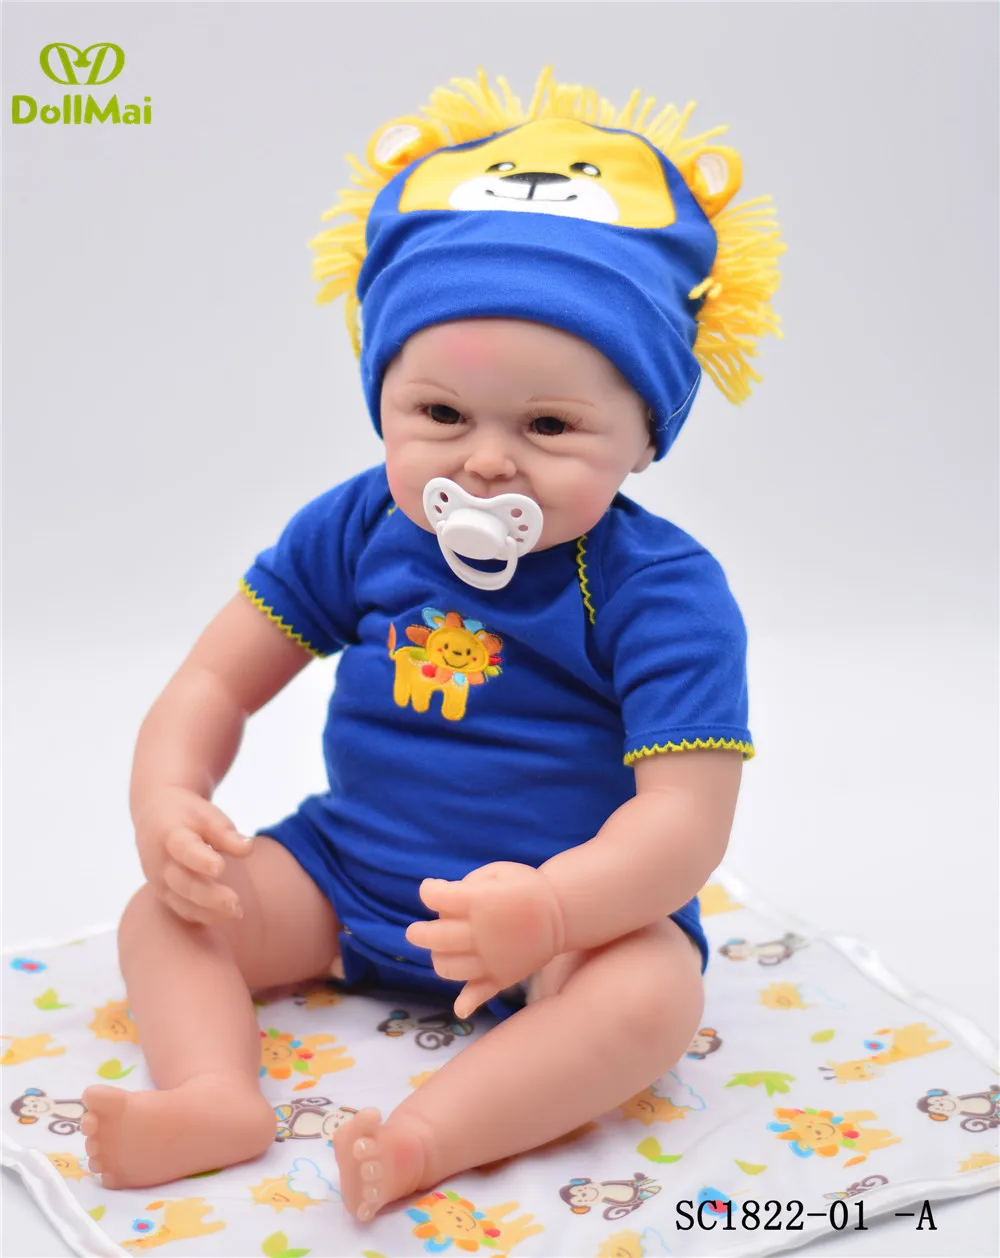 Reborn baby boy куклы 22 дюймов 55 см Силиконовые reborn baby doll игрушки для ребенка подарок bearhead Bebes reborn menino bonecas